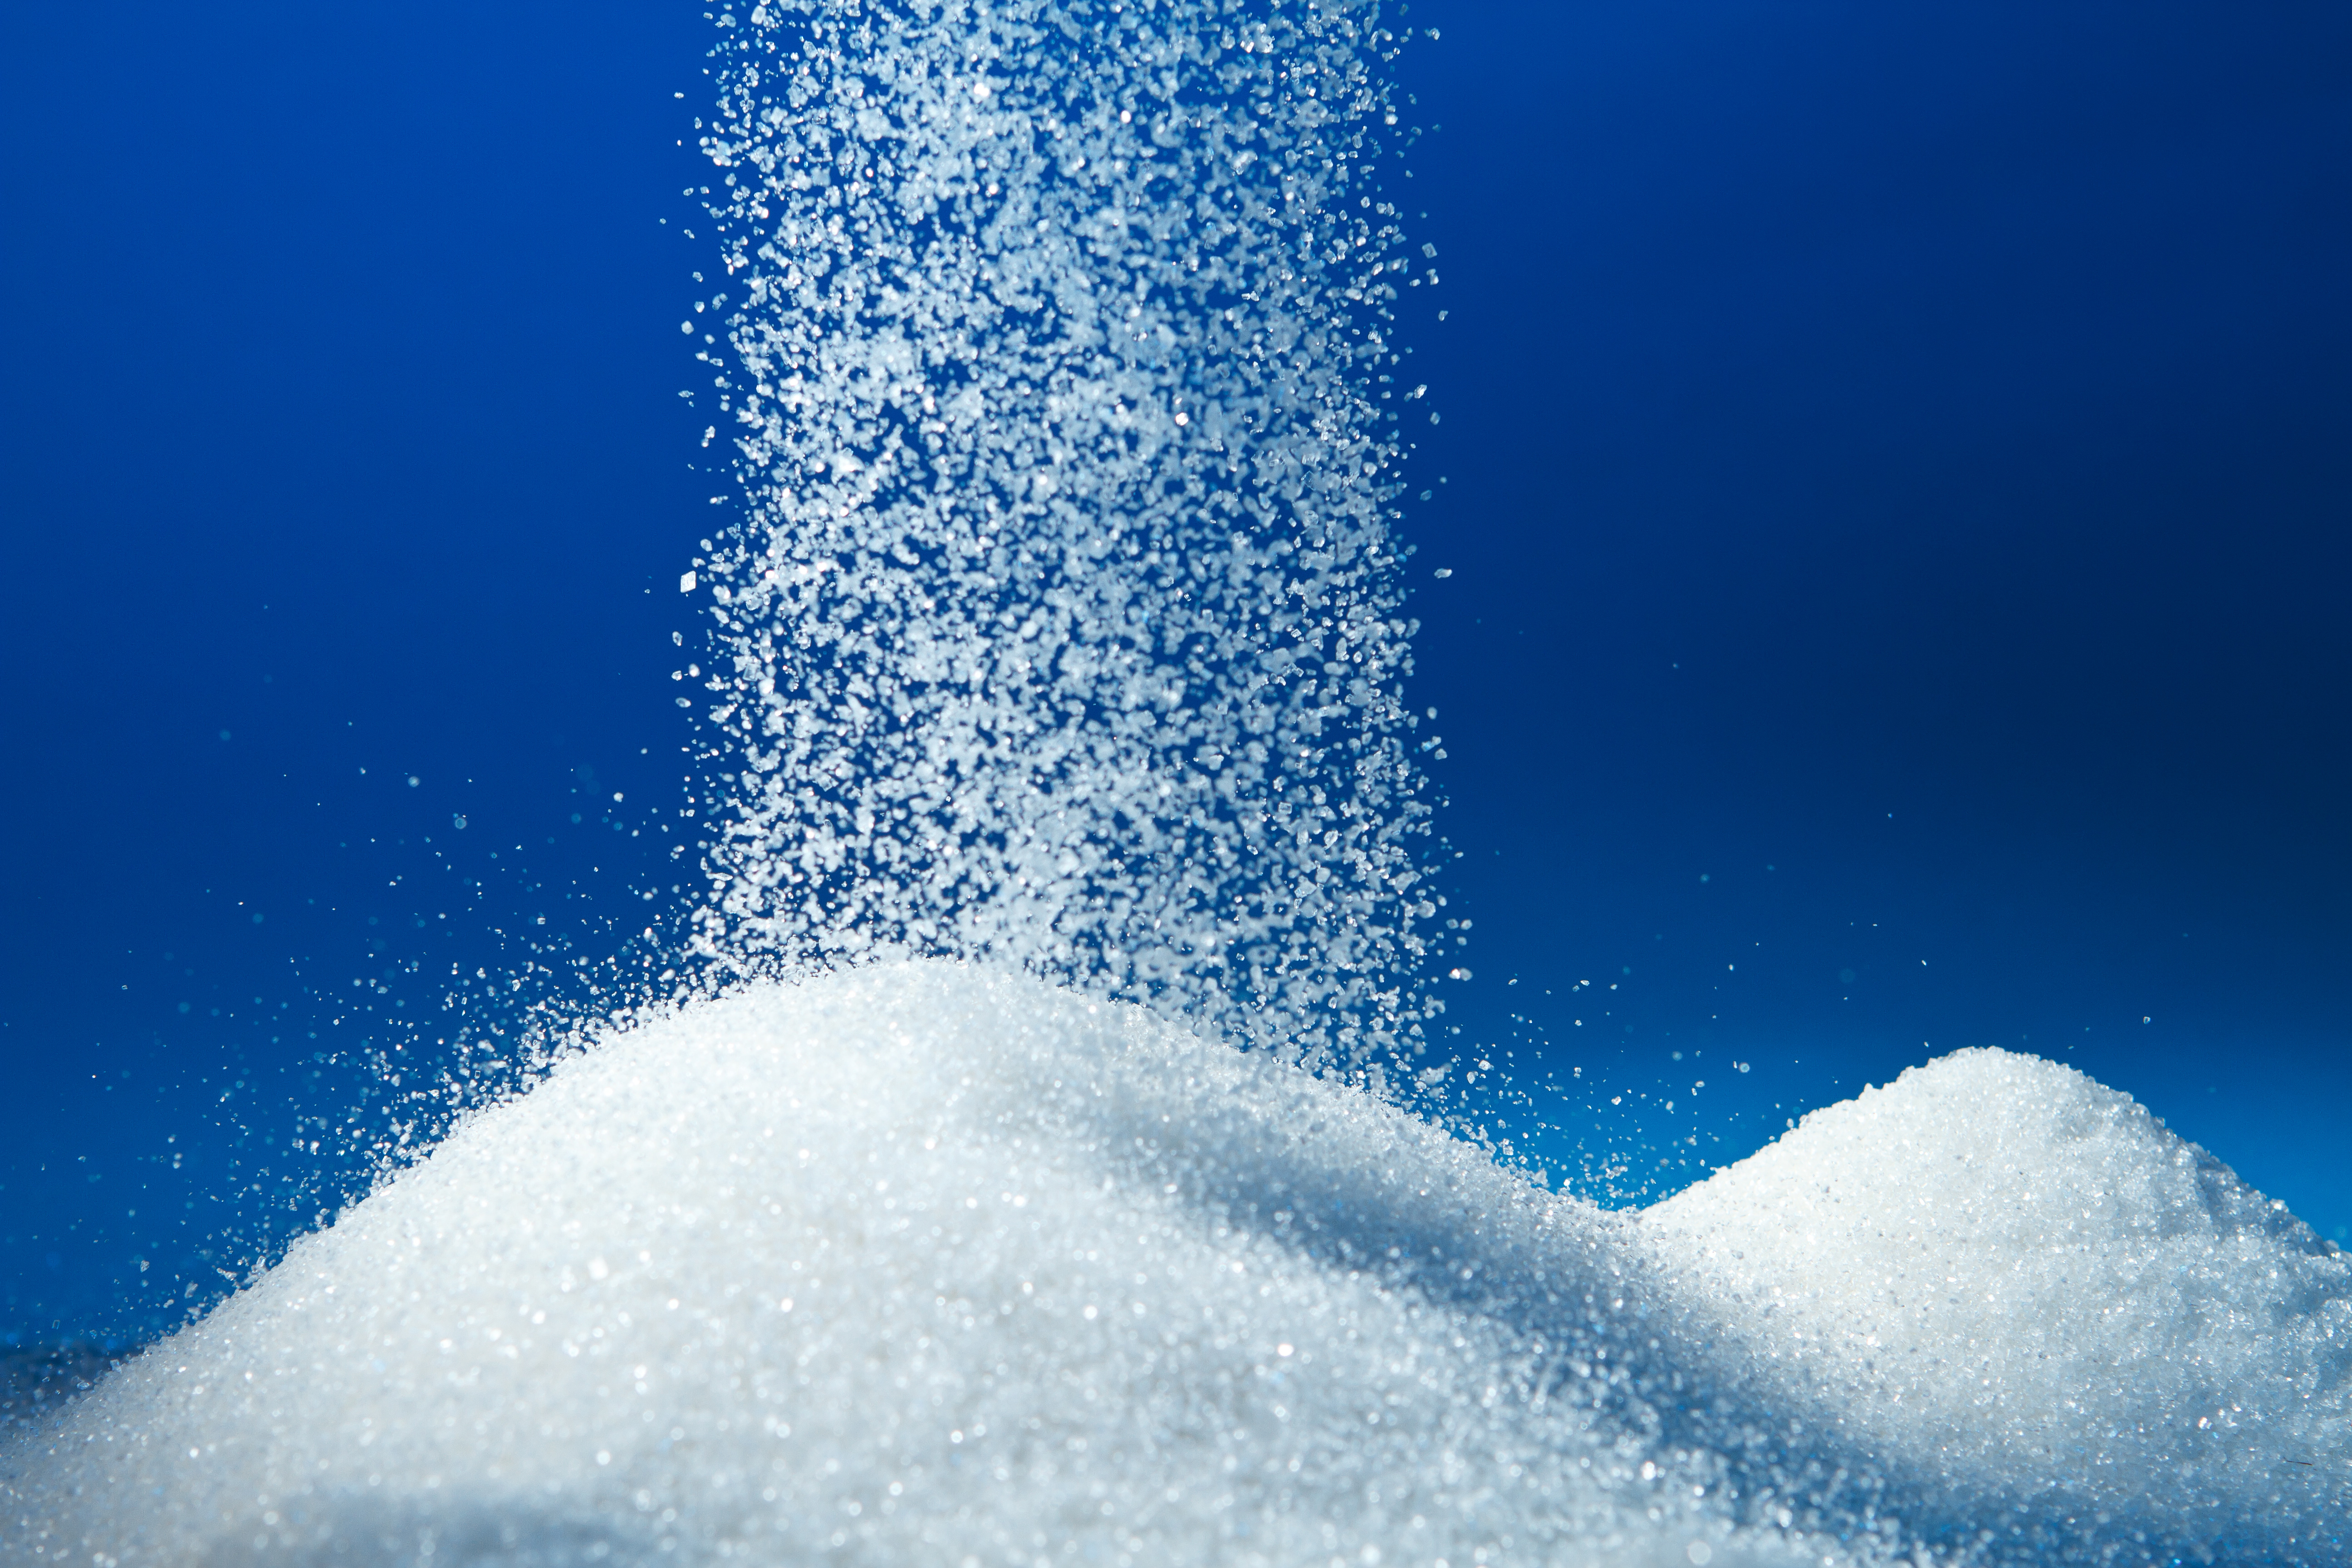 Two EBZ sugar factories in Serres and Orestiada to shut down